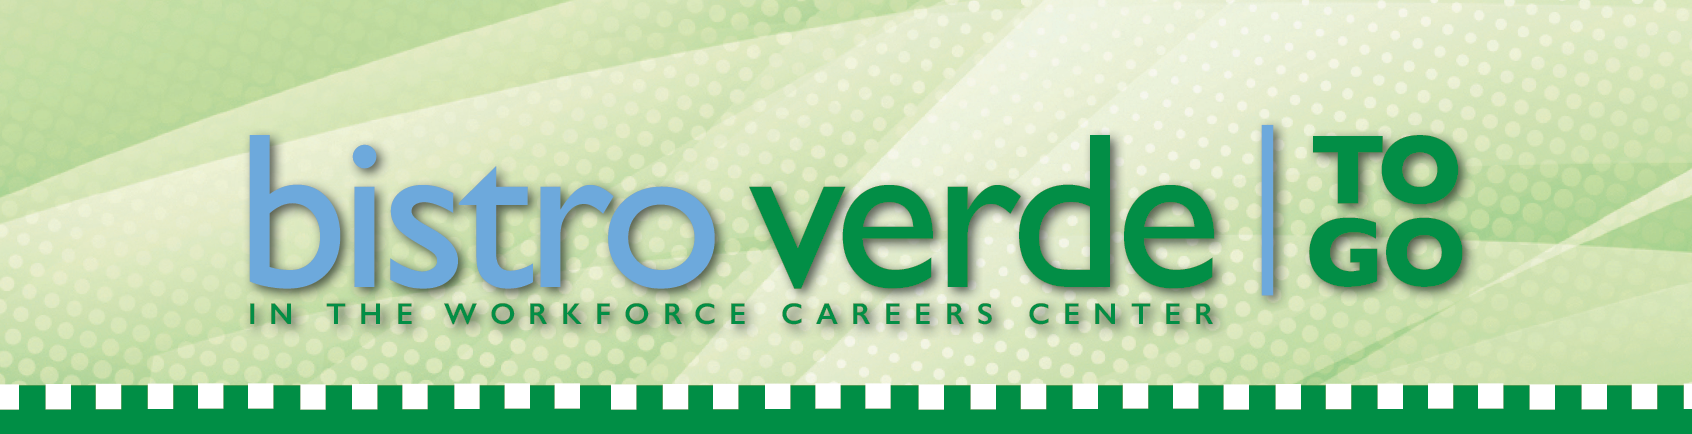 Bistro Verde To Go in the Workforce Careers Center